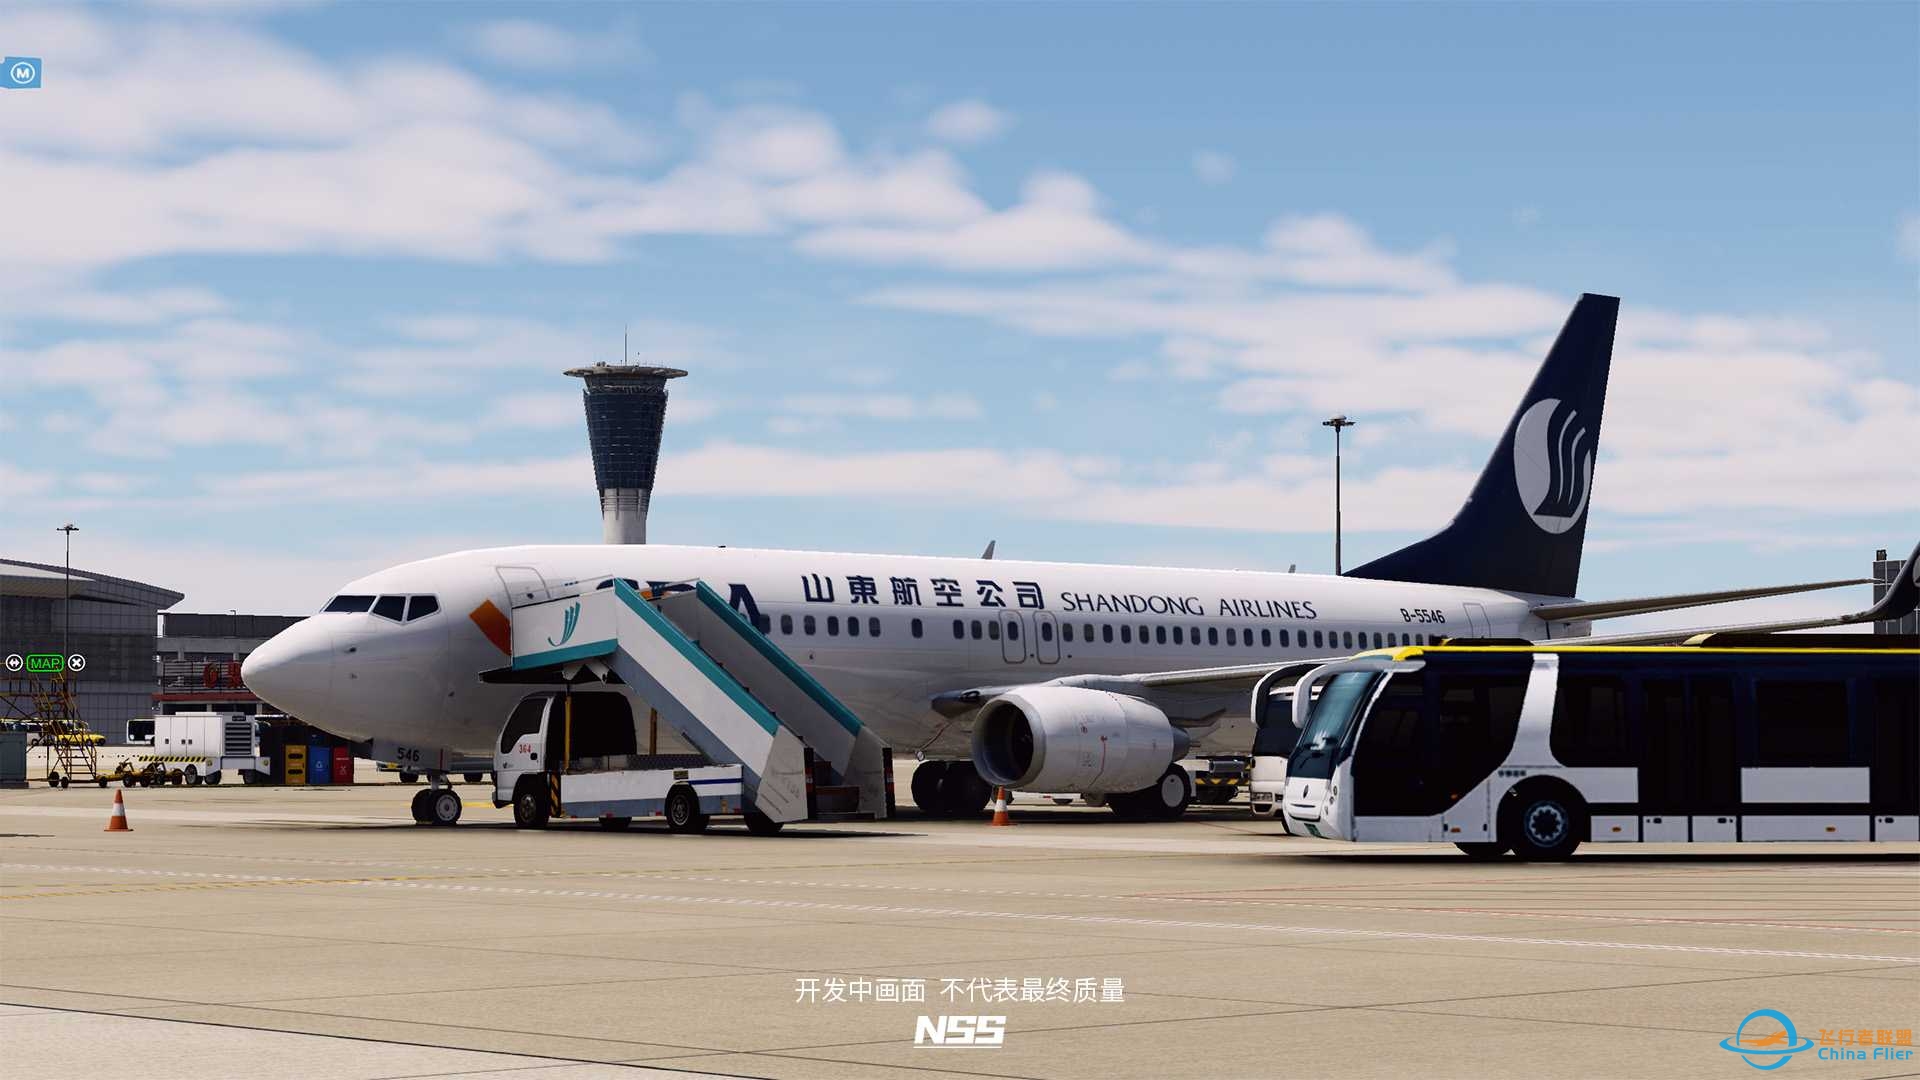 NSS地景开发组 | ZSJN | 济南遥墙国际机场项目最新进展-9359 